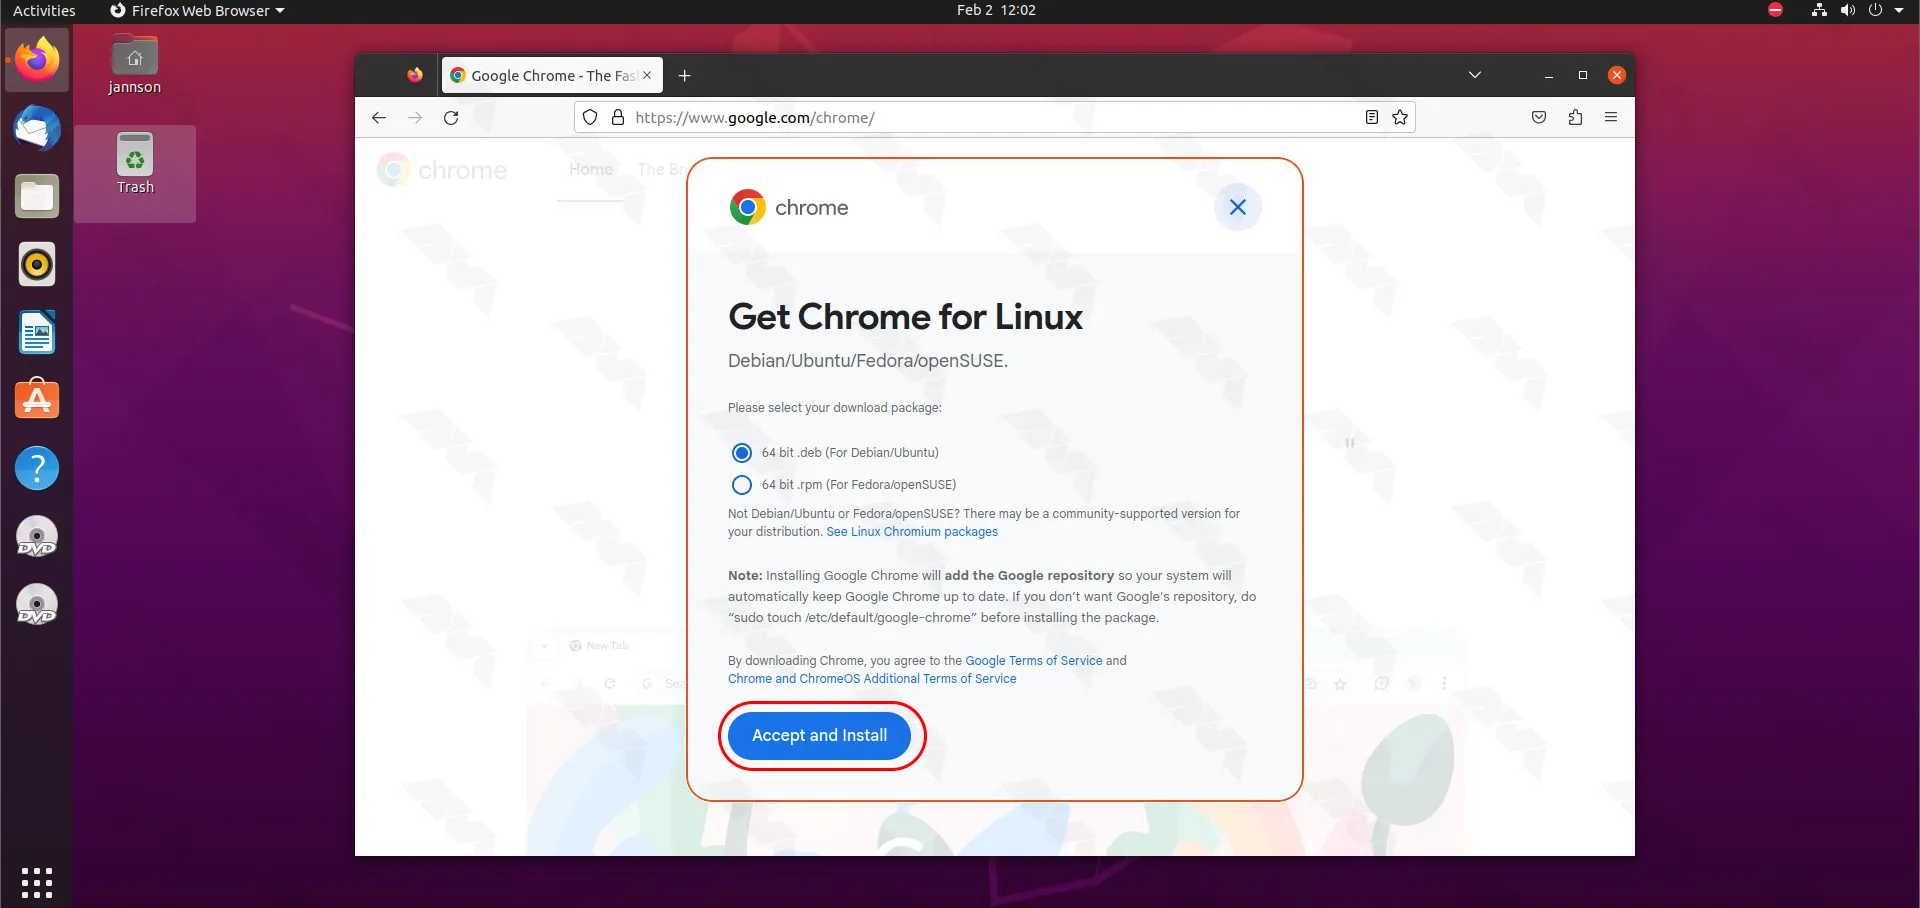 2 accept and install google chrome on ubuntu